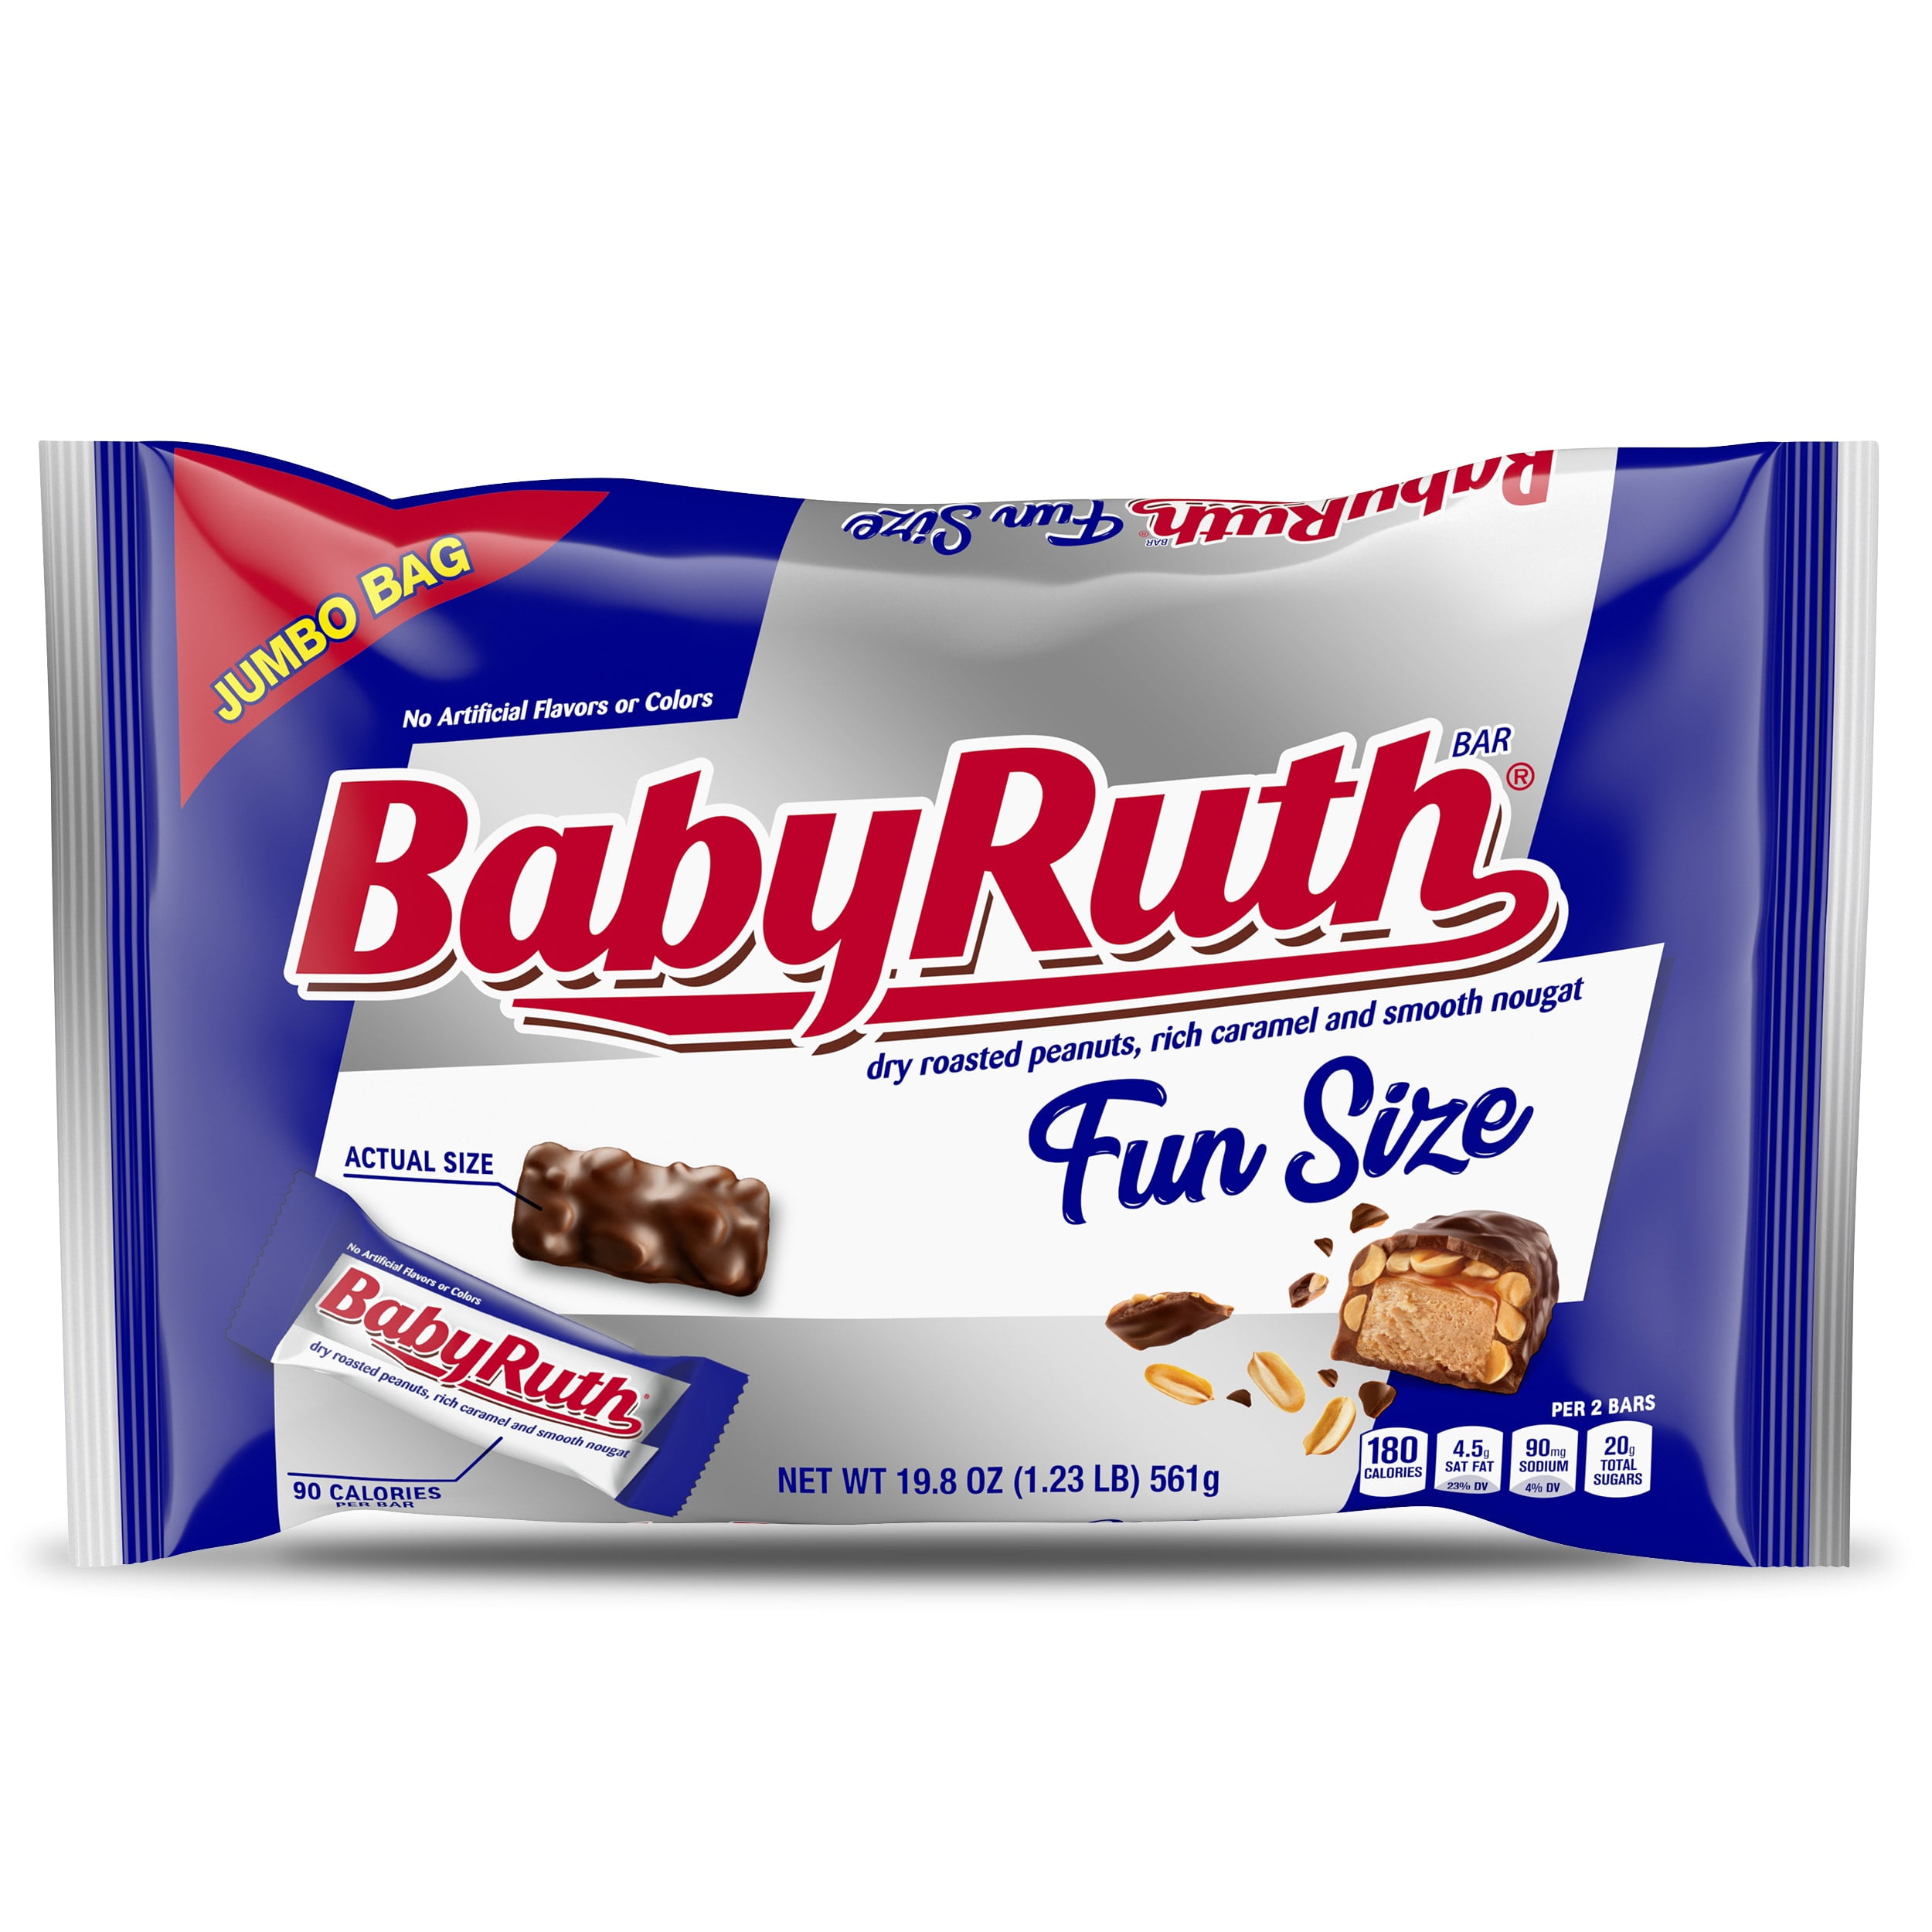 Baby Ruth Chocolatey, Peanut, Caramel and Nougat, Fun Size Candy Bars, Easter Basket Stuffers, 19.8 oz